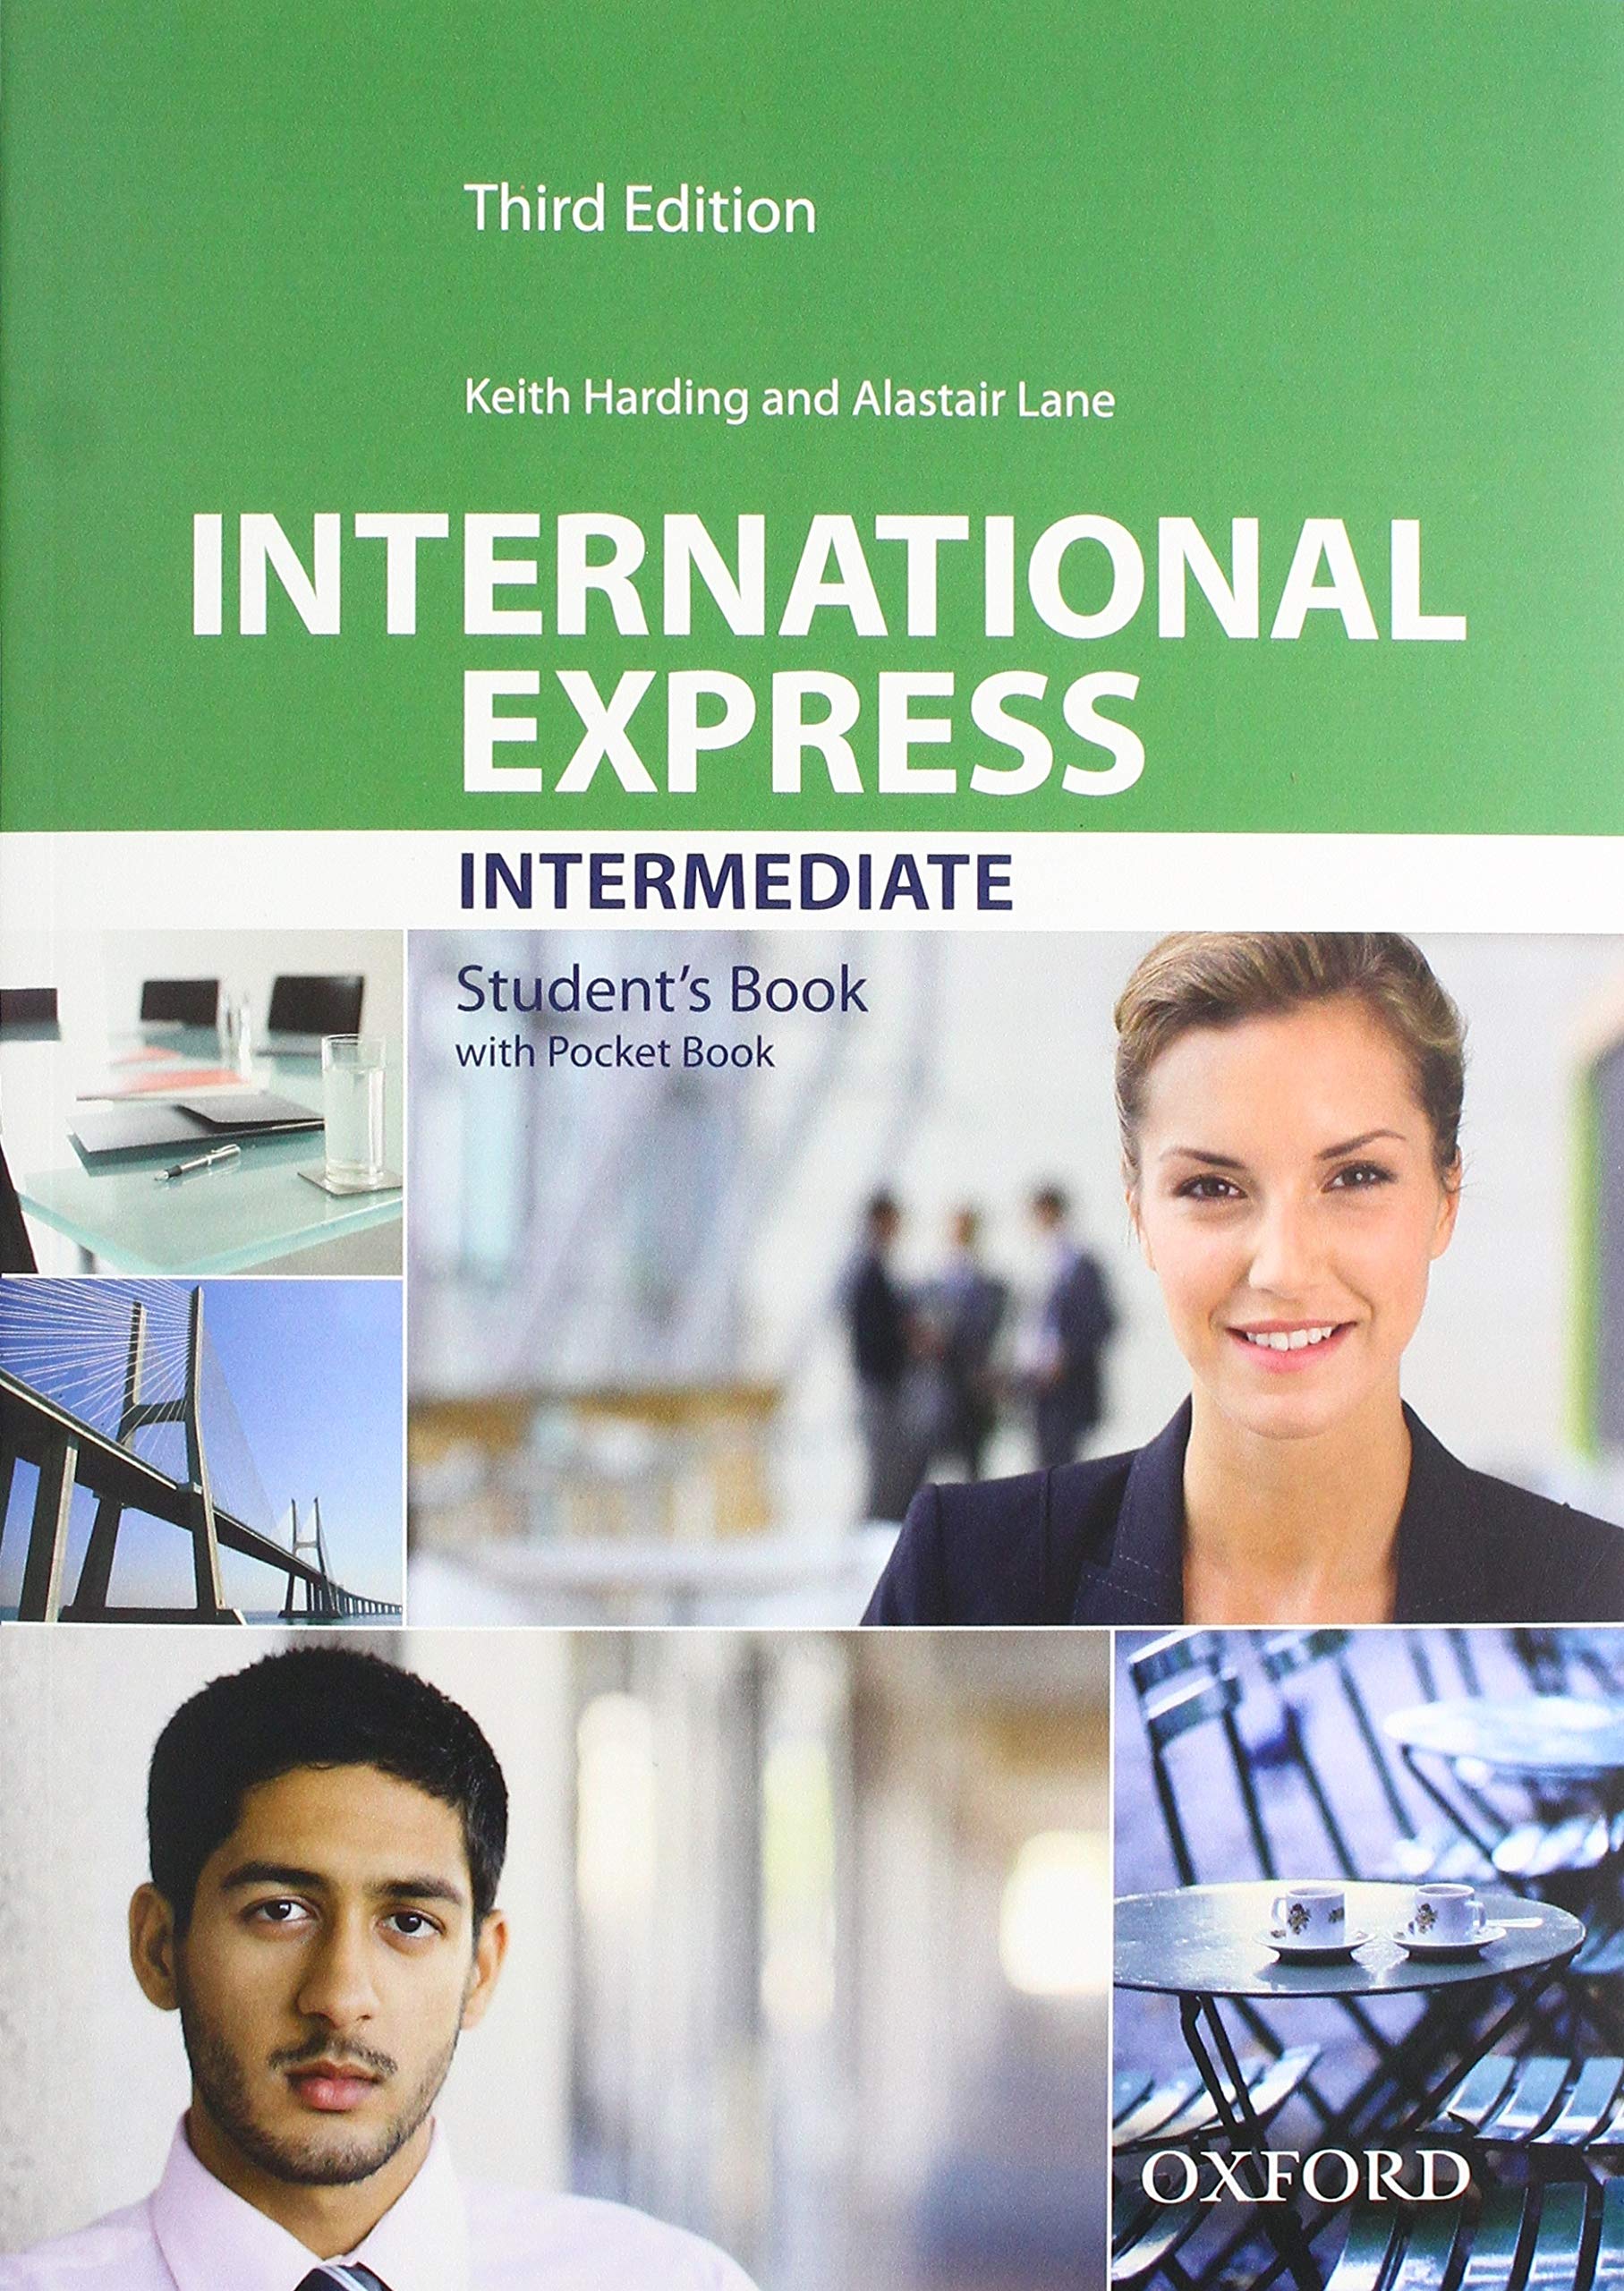 INTERNATIONAL EXPRESS INTERMEDIATE 3rd ED Student's Book + Pocket Book